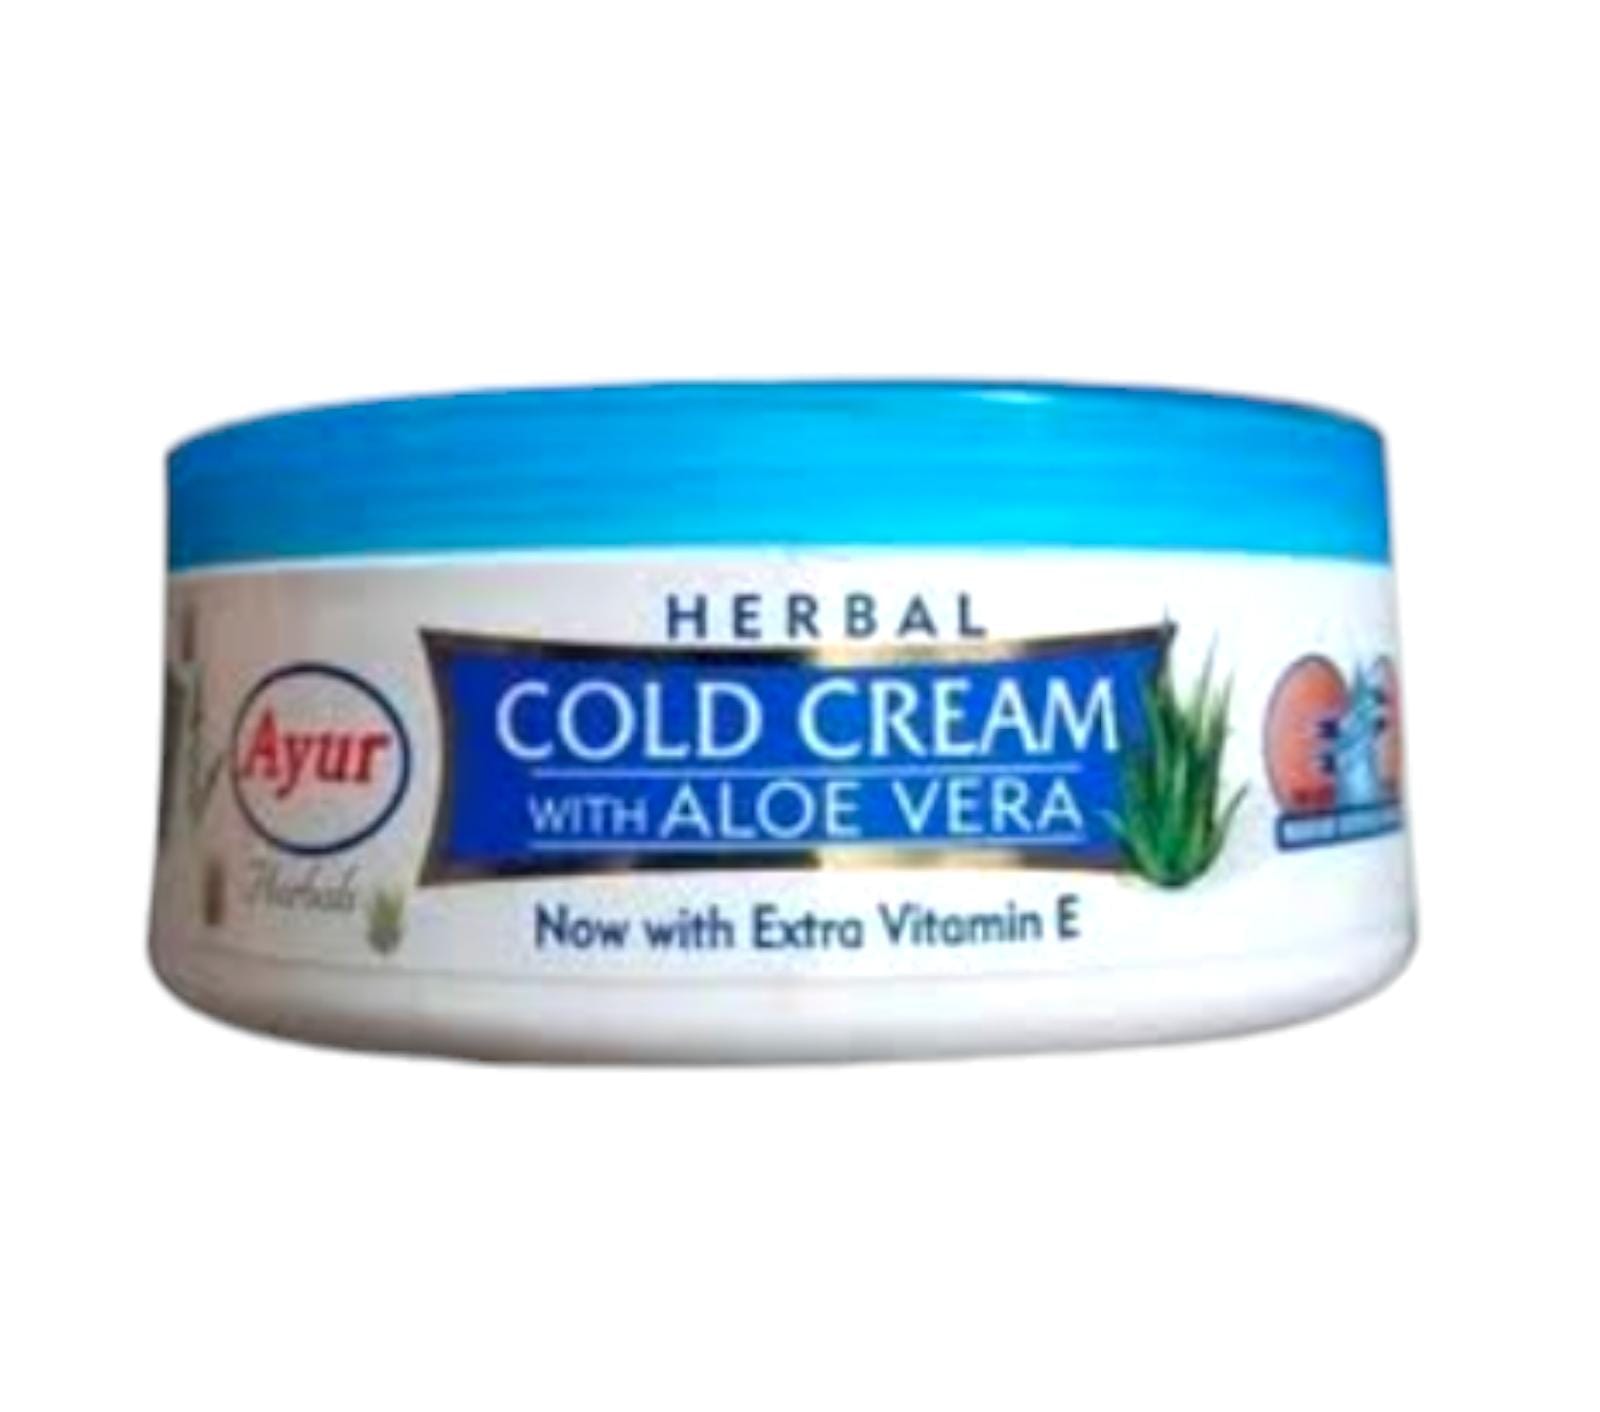 HERBAL Cold Cream With Aloe Vera